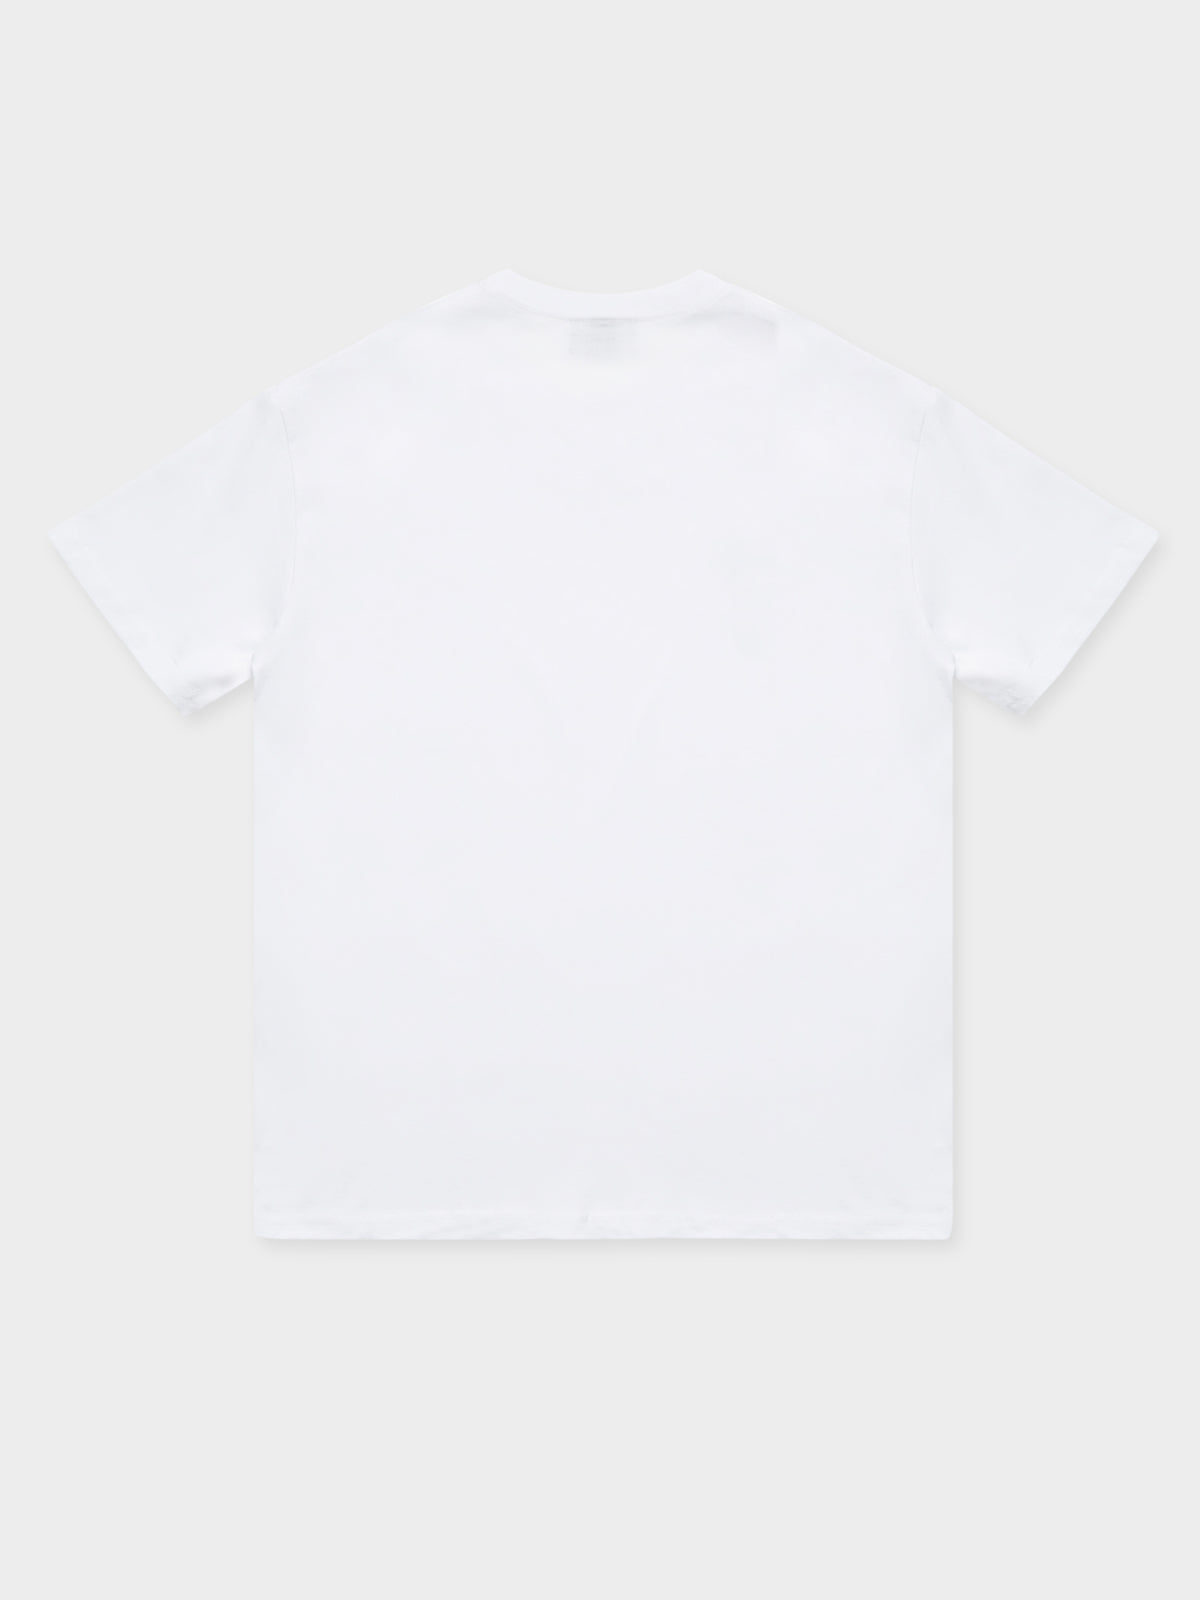 World Tour T-Shirt in White